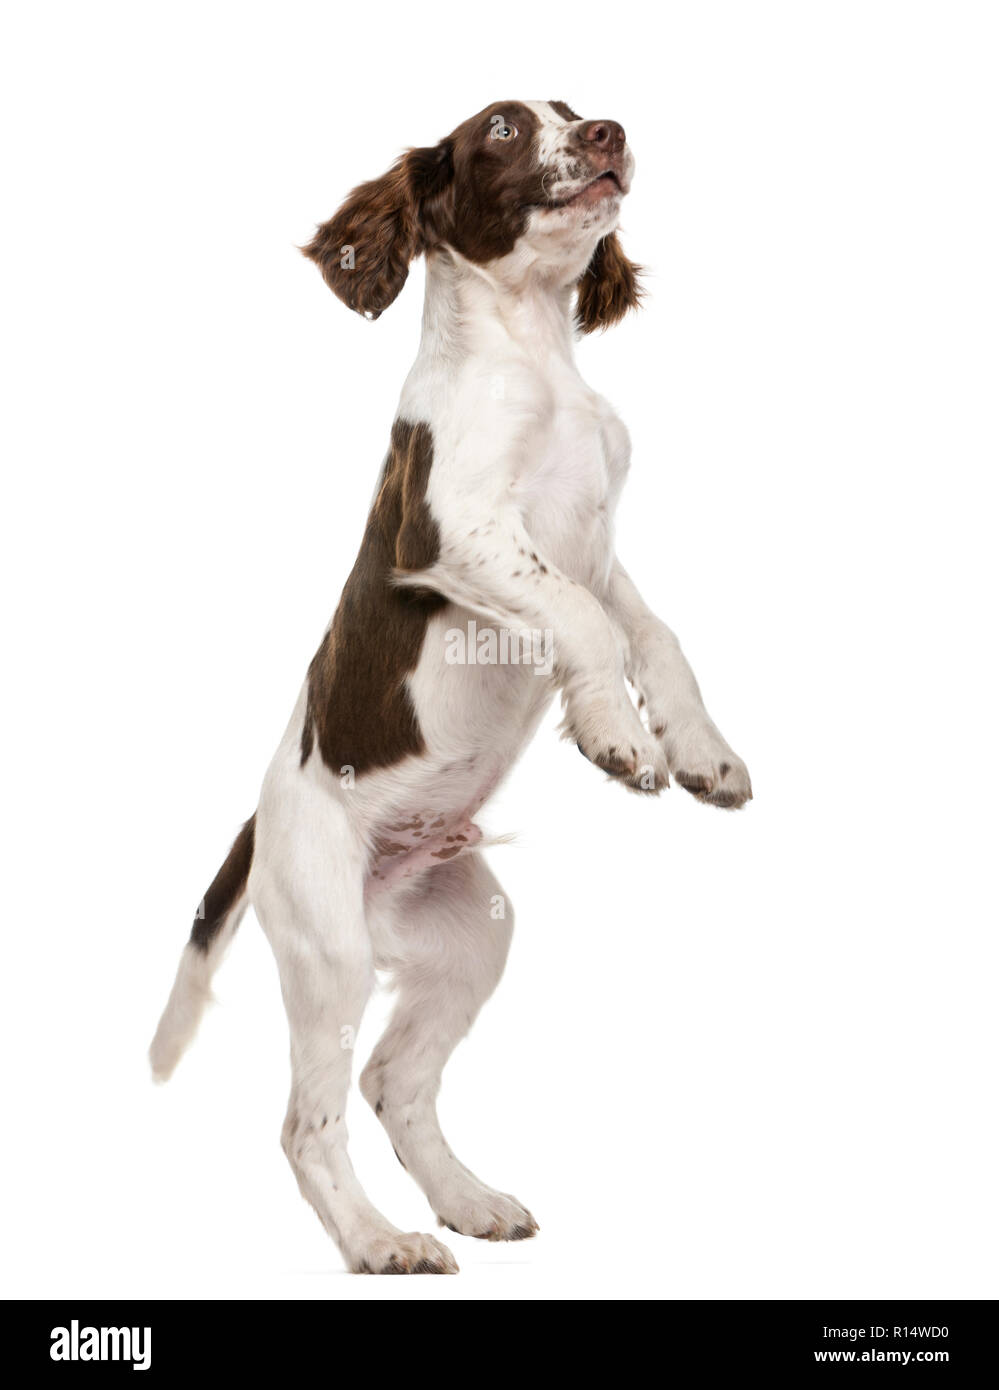 English Springer Spaniel standing on hind legs against white background Stock Photo